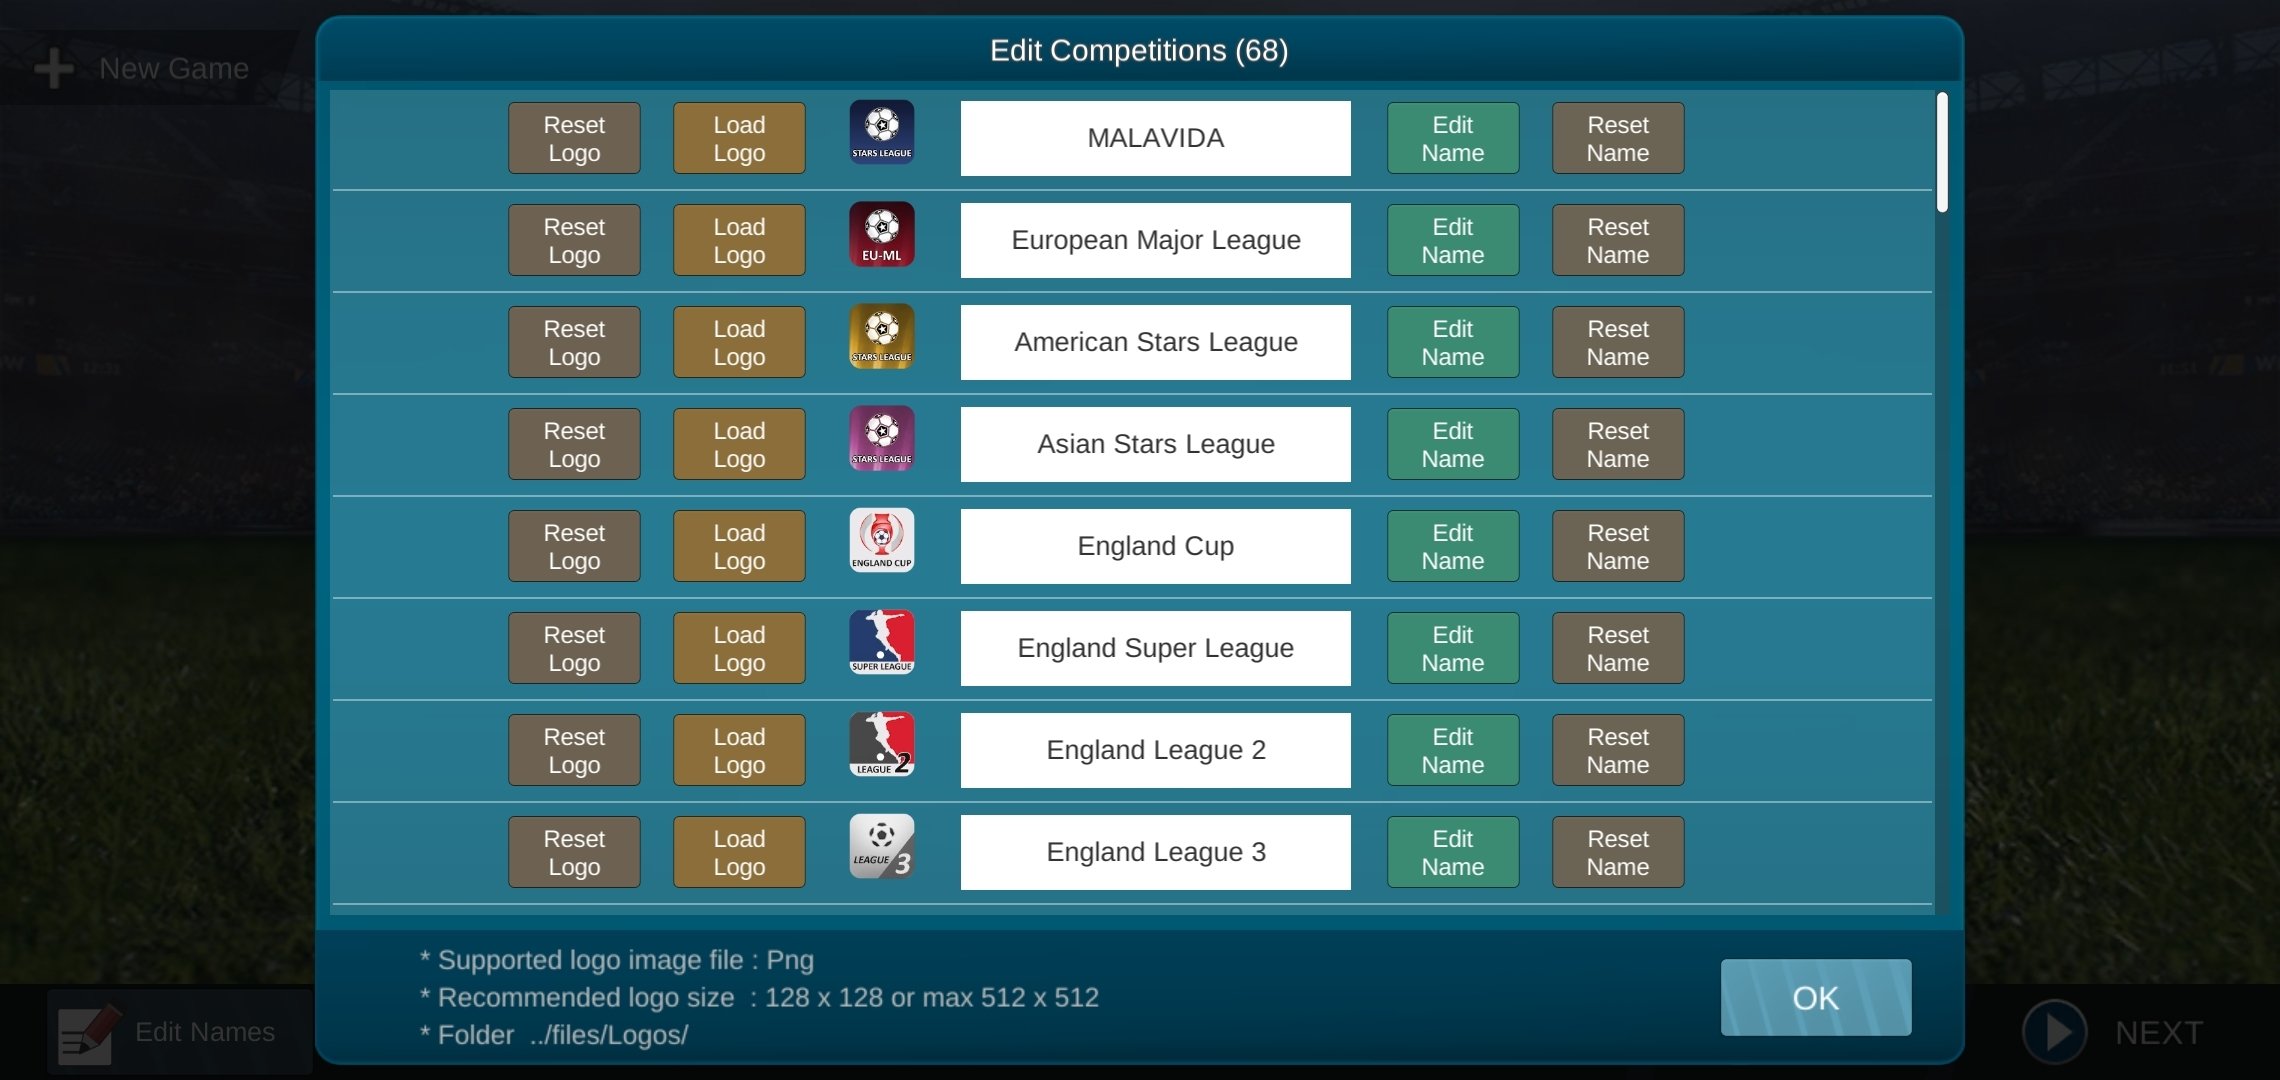 Pro League Soccer para Android - Baixe o APK na Uptodown